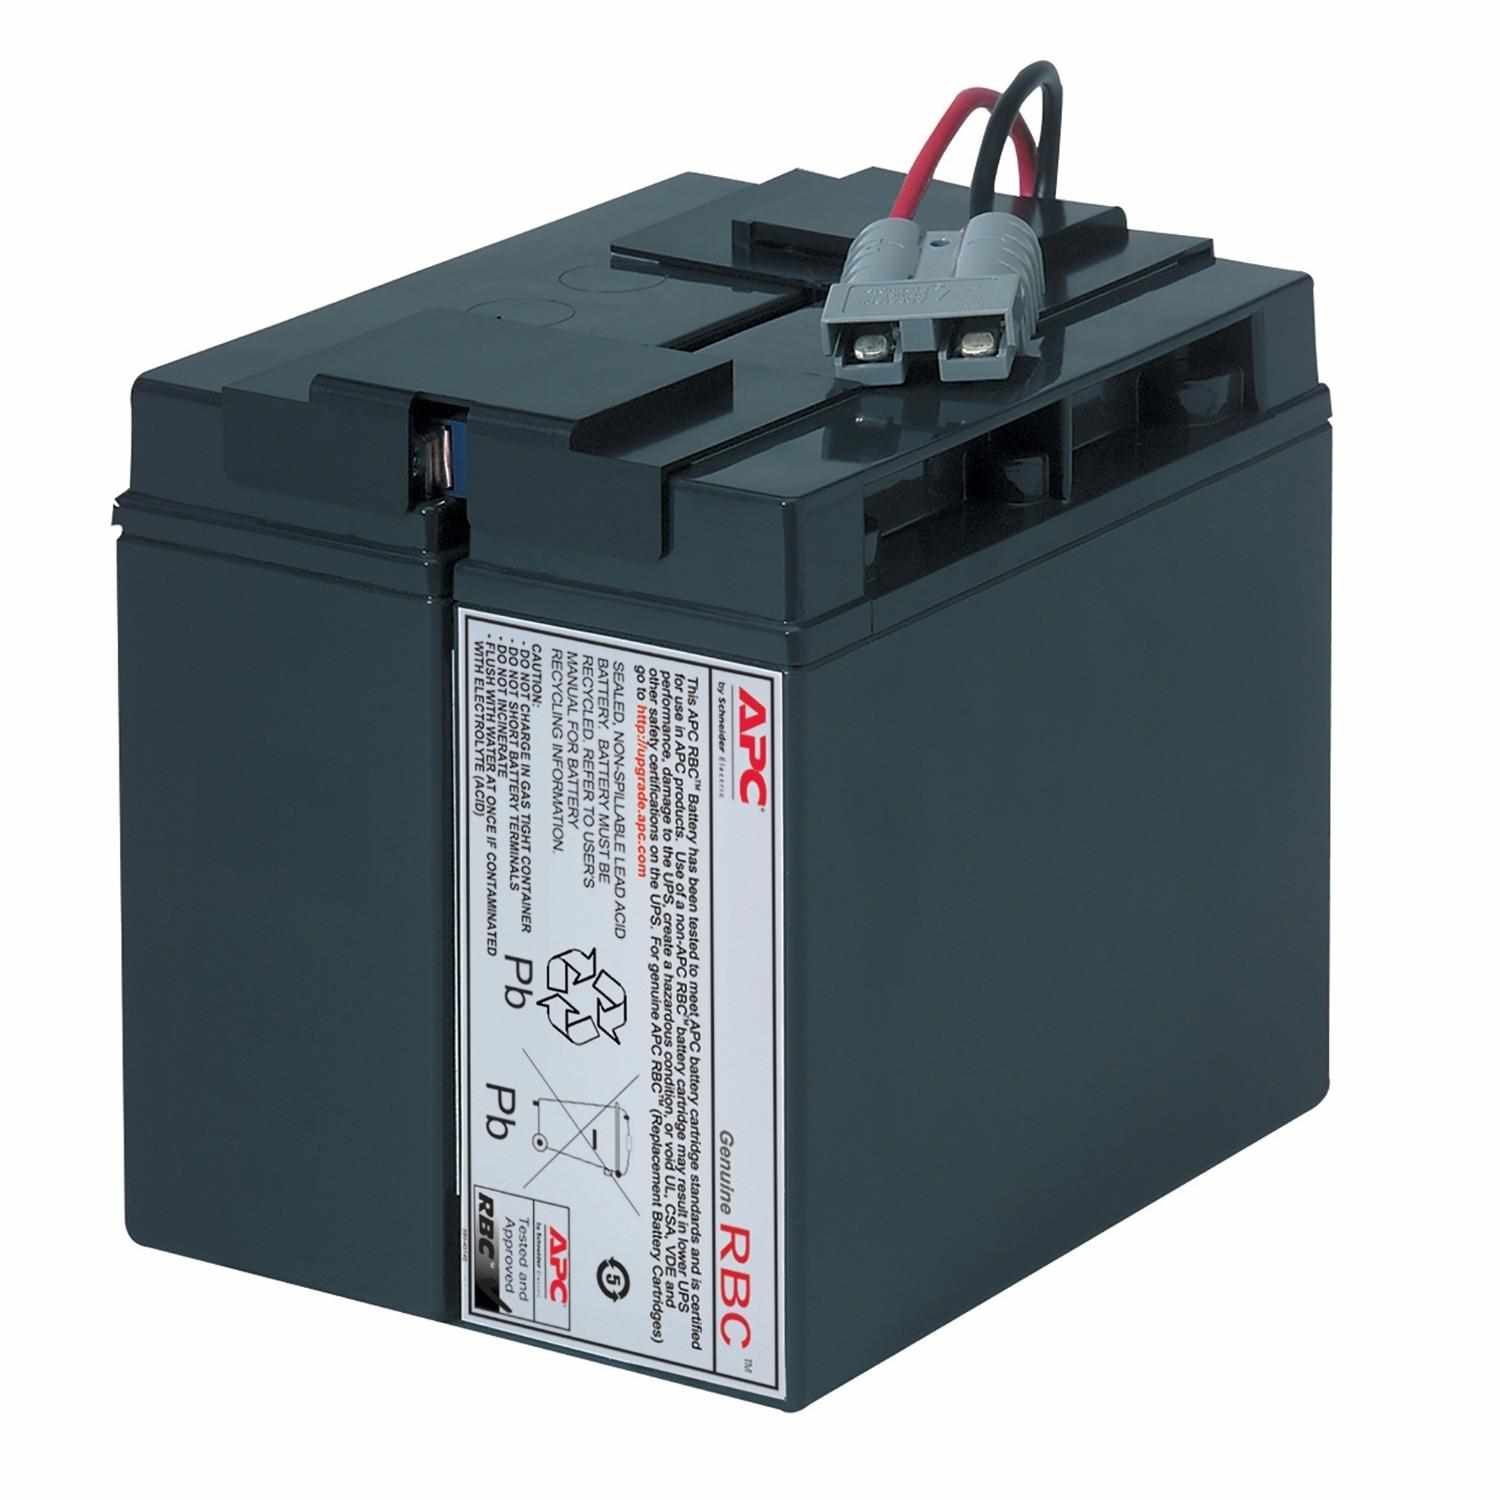 APC Replacement Battery Cartridge #148, SMC2000I APCRBC148